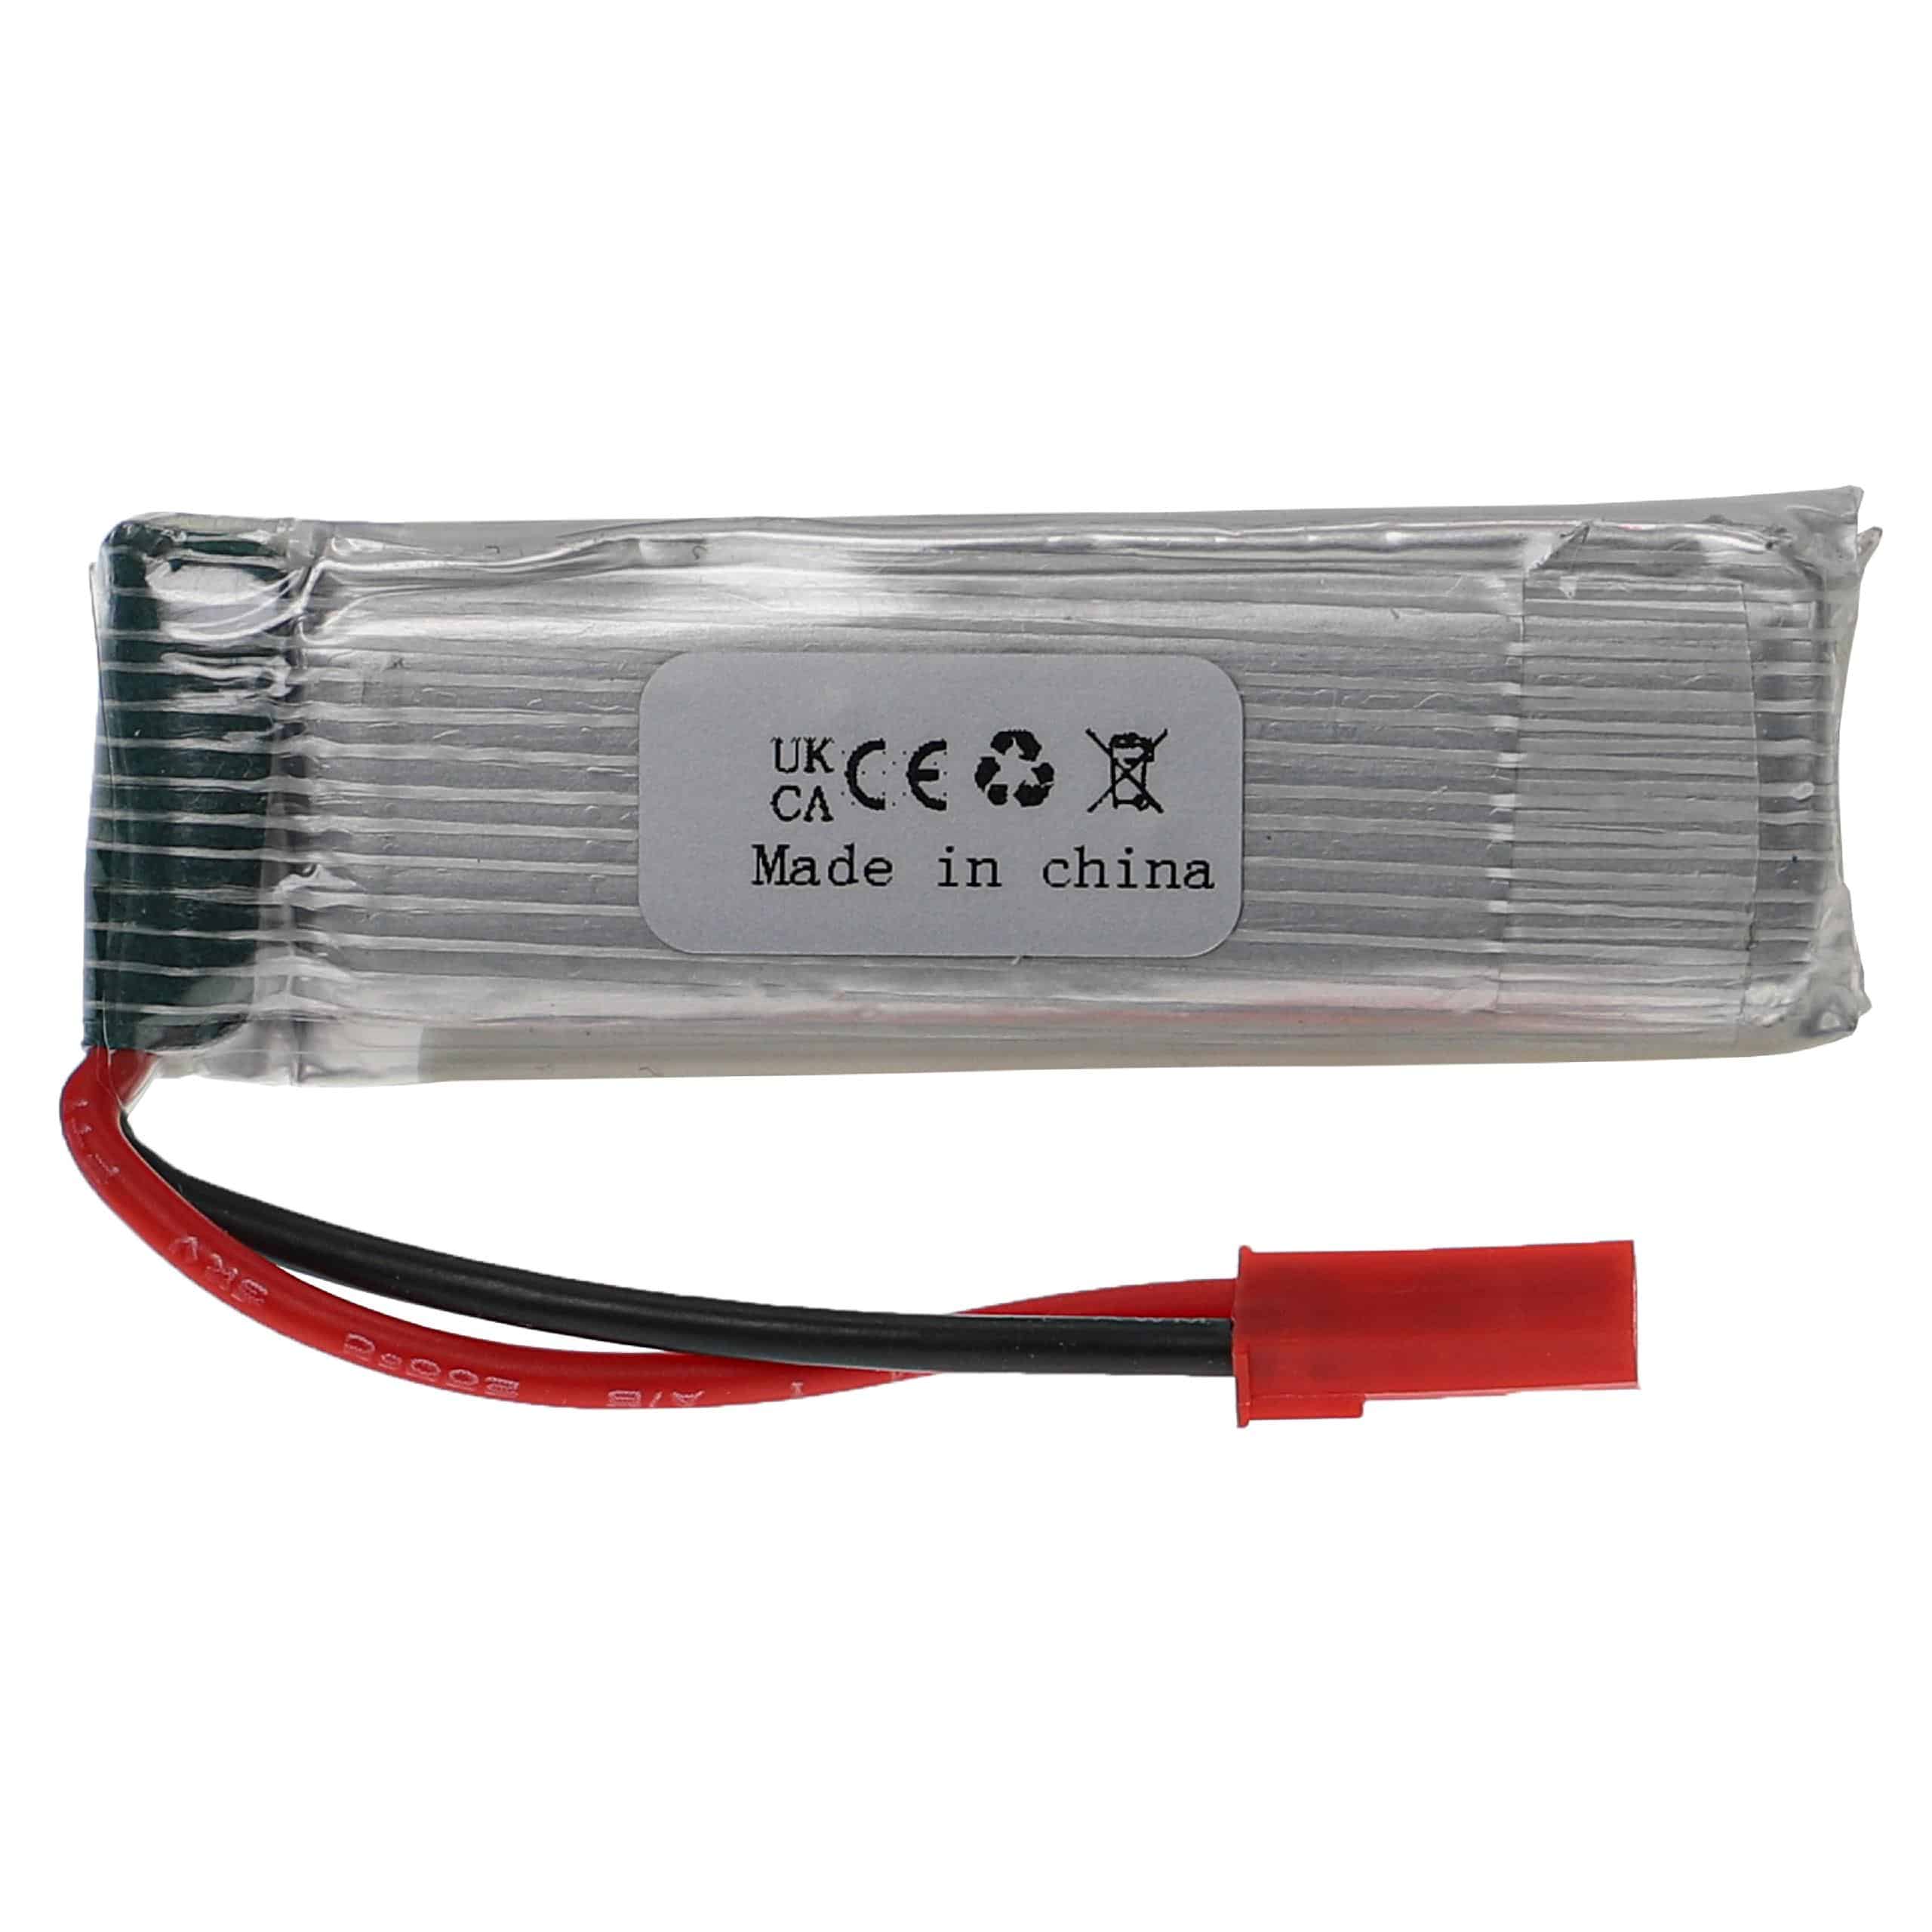 Akumulator do modeli zdalnie sterowanych RC - 500 mAh 3,7 V LiPo, BEC